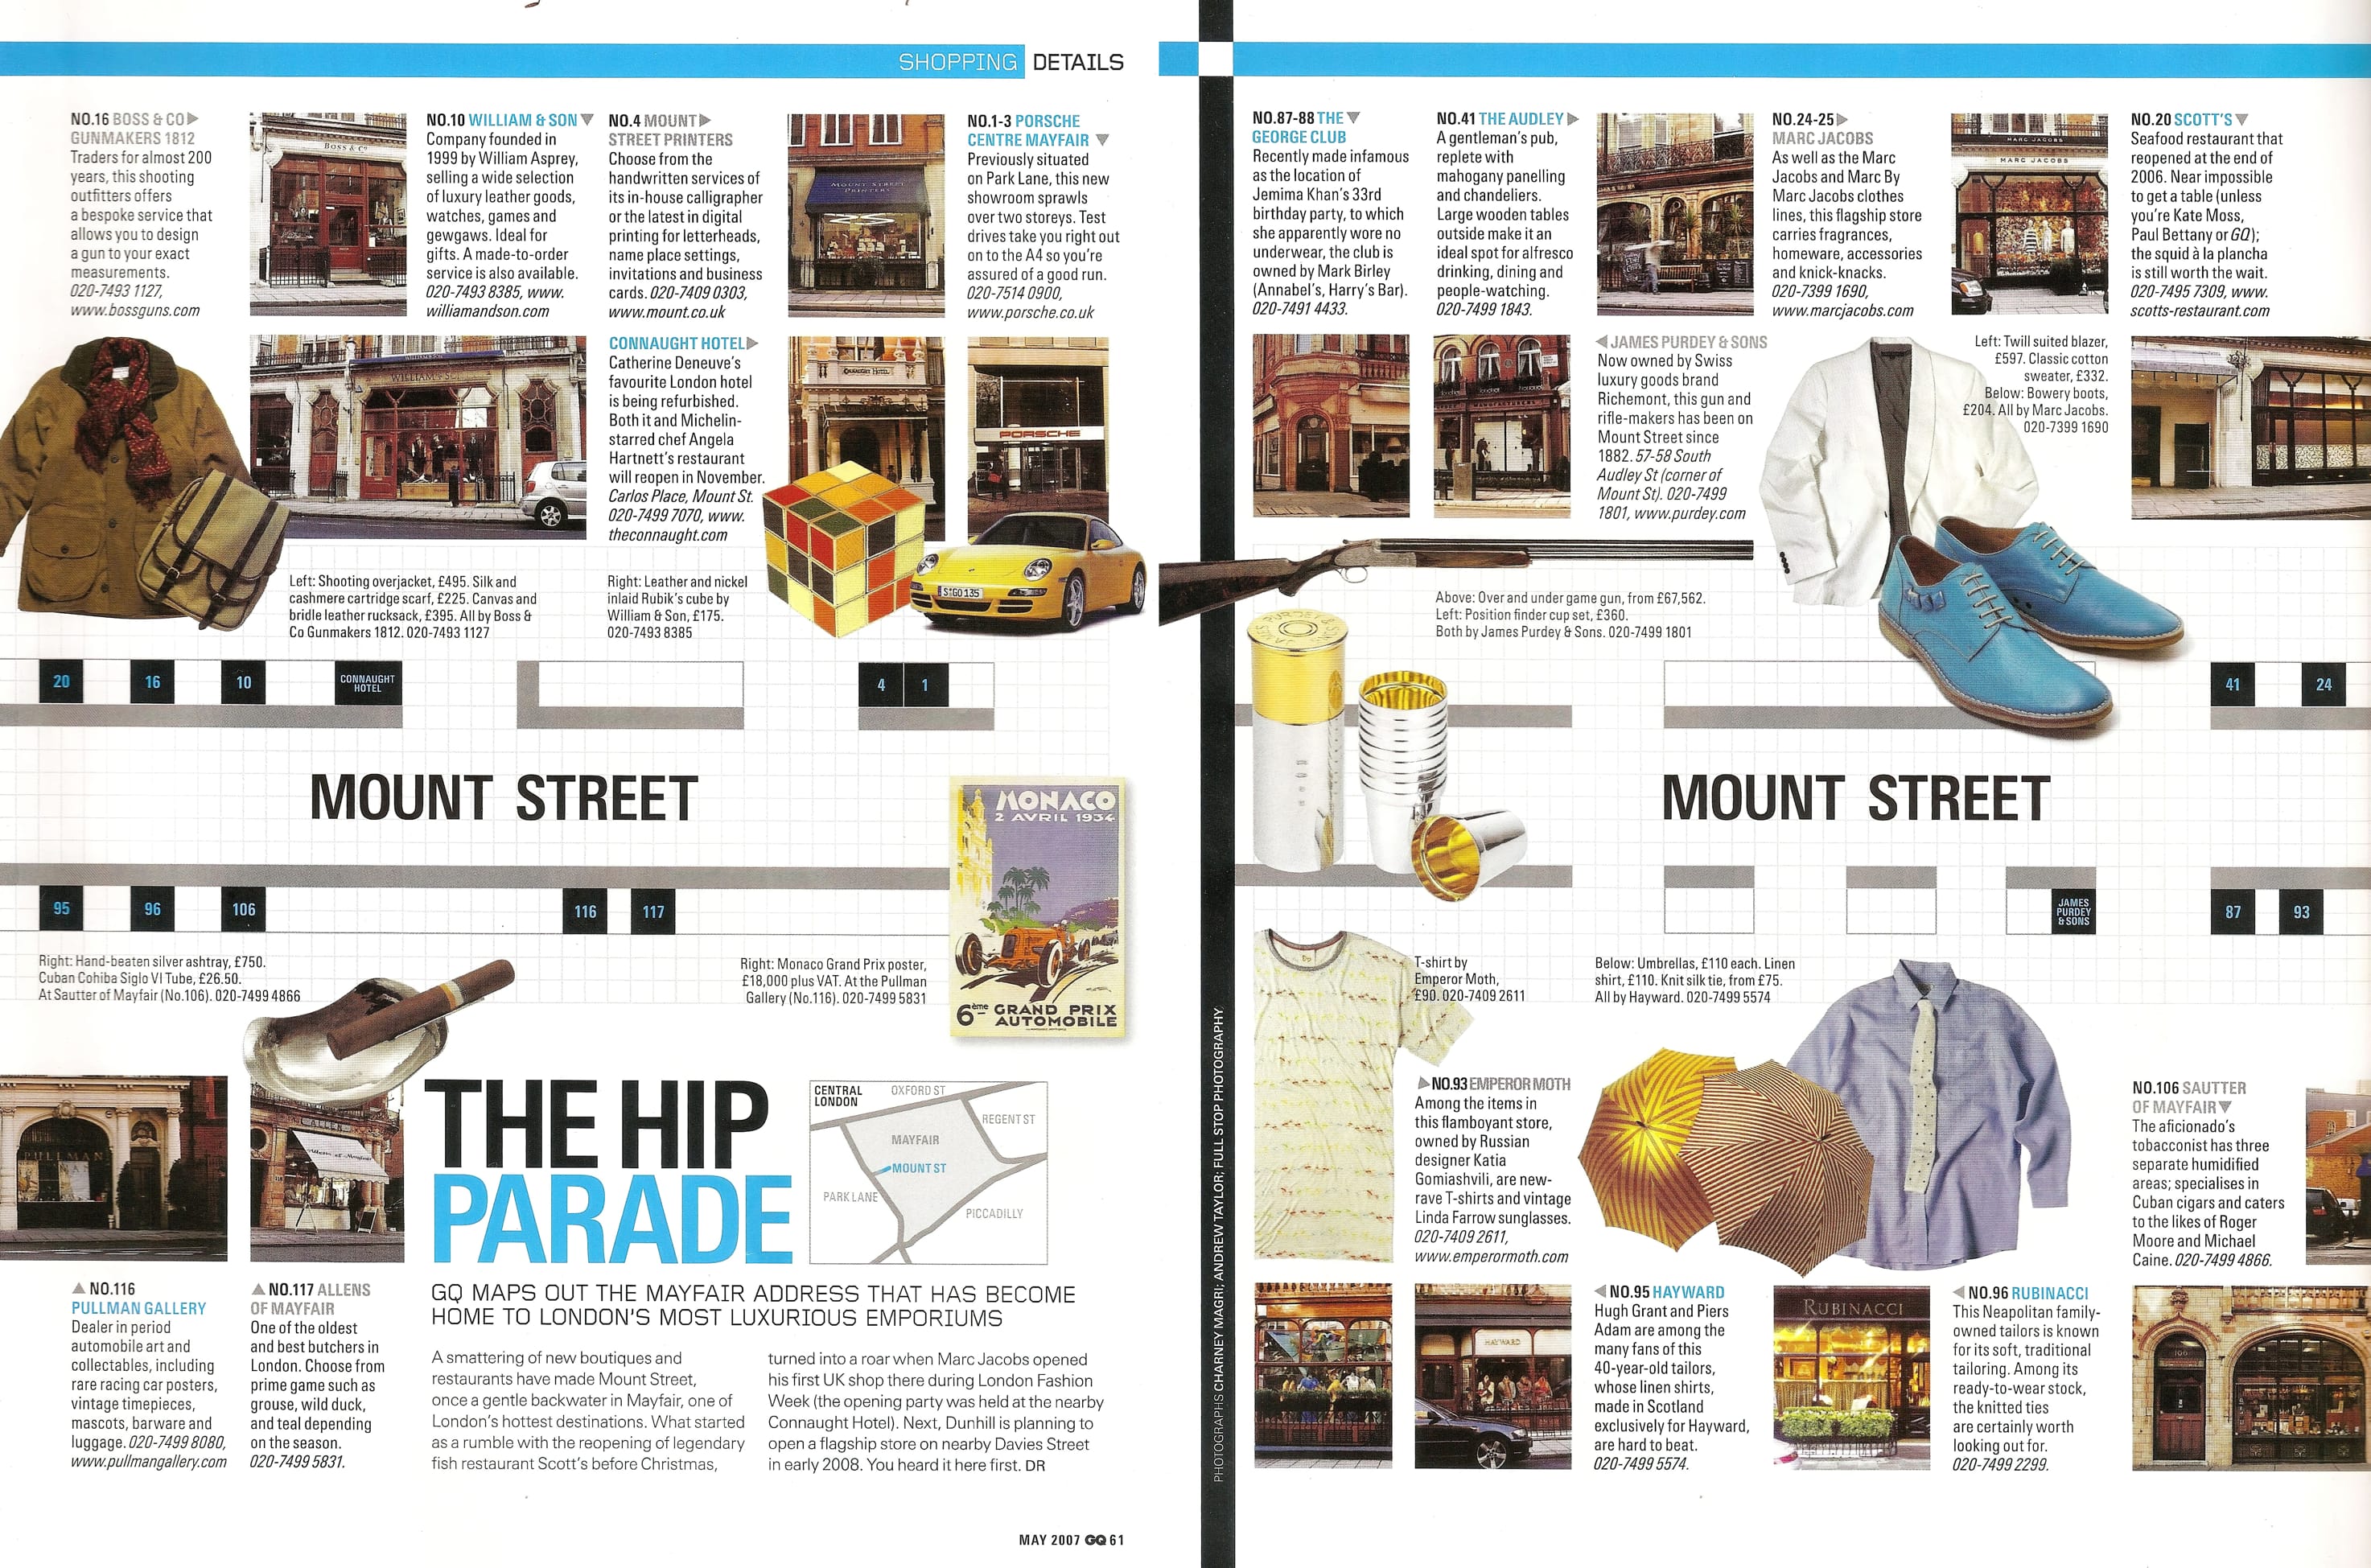 'The Hip Parade' - Mark Glenn Hair Enhancement in one of London's hottest destinations - GQ Magazine